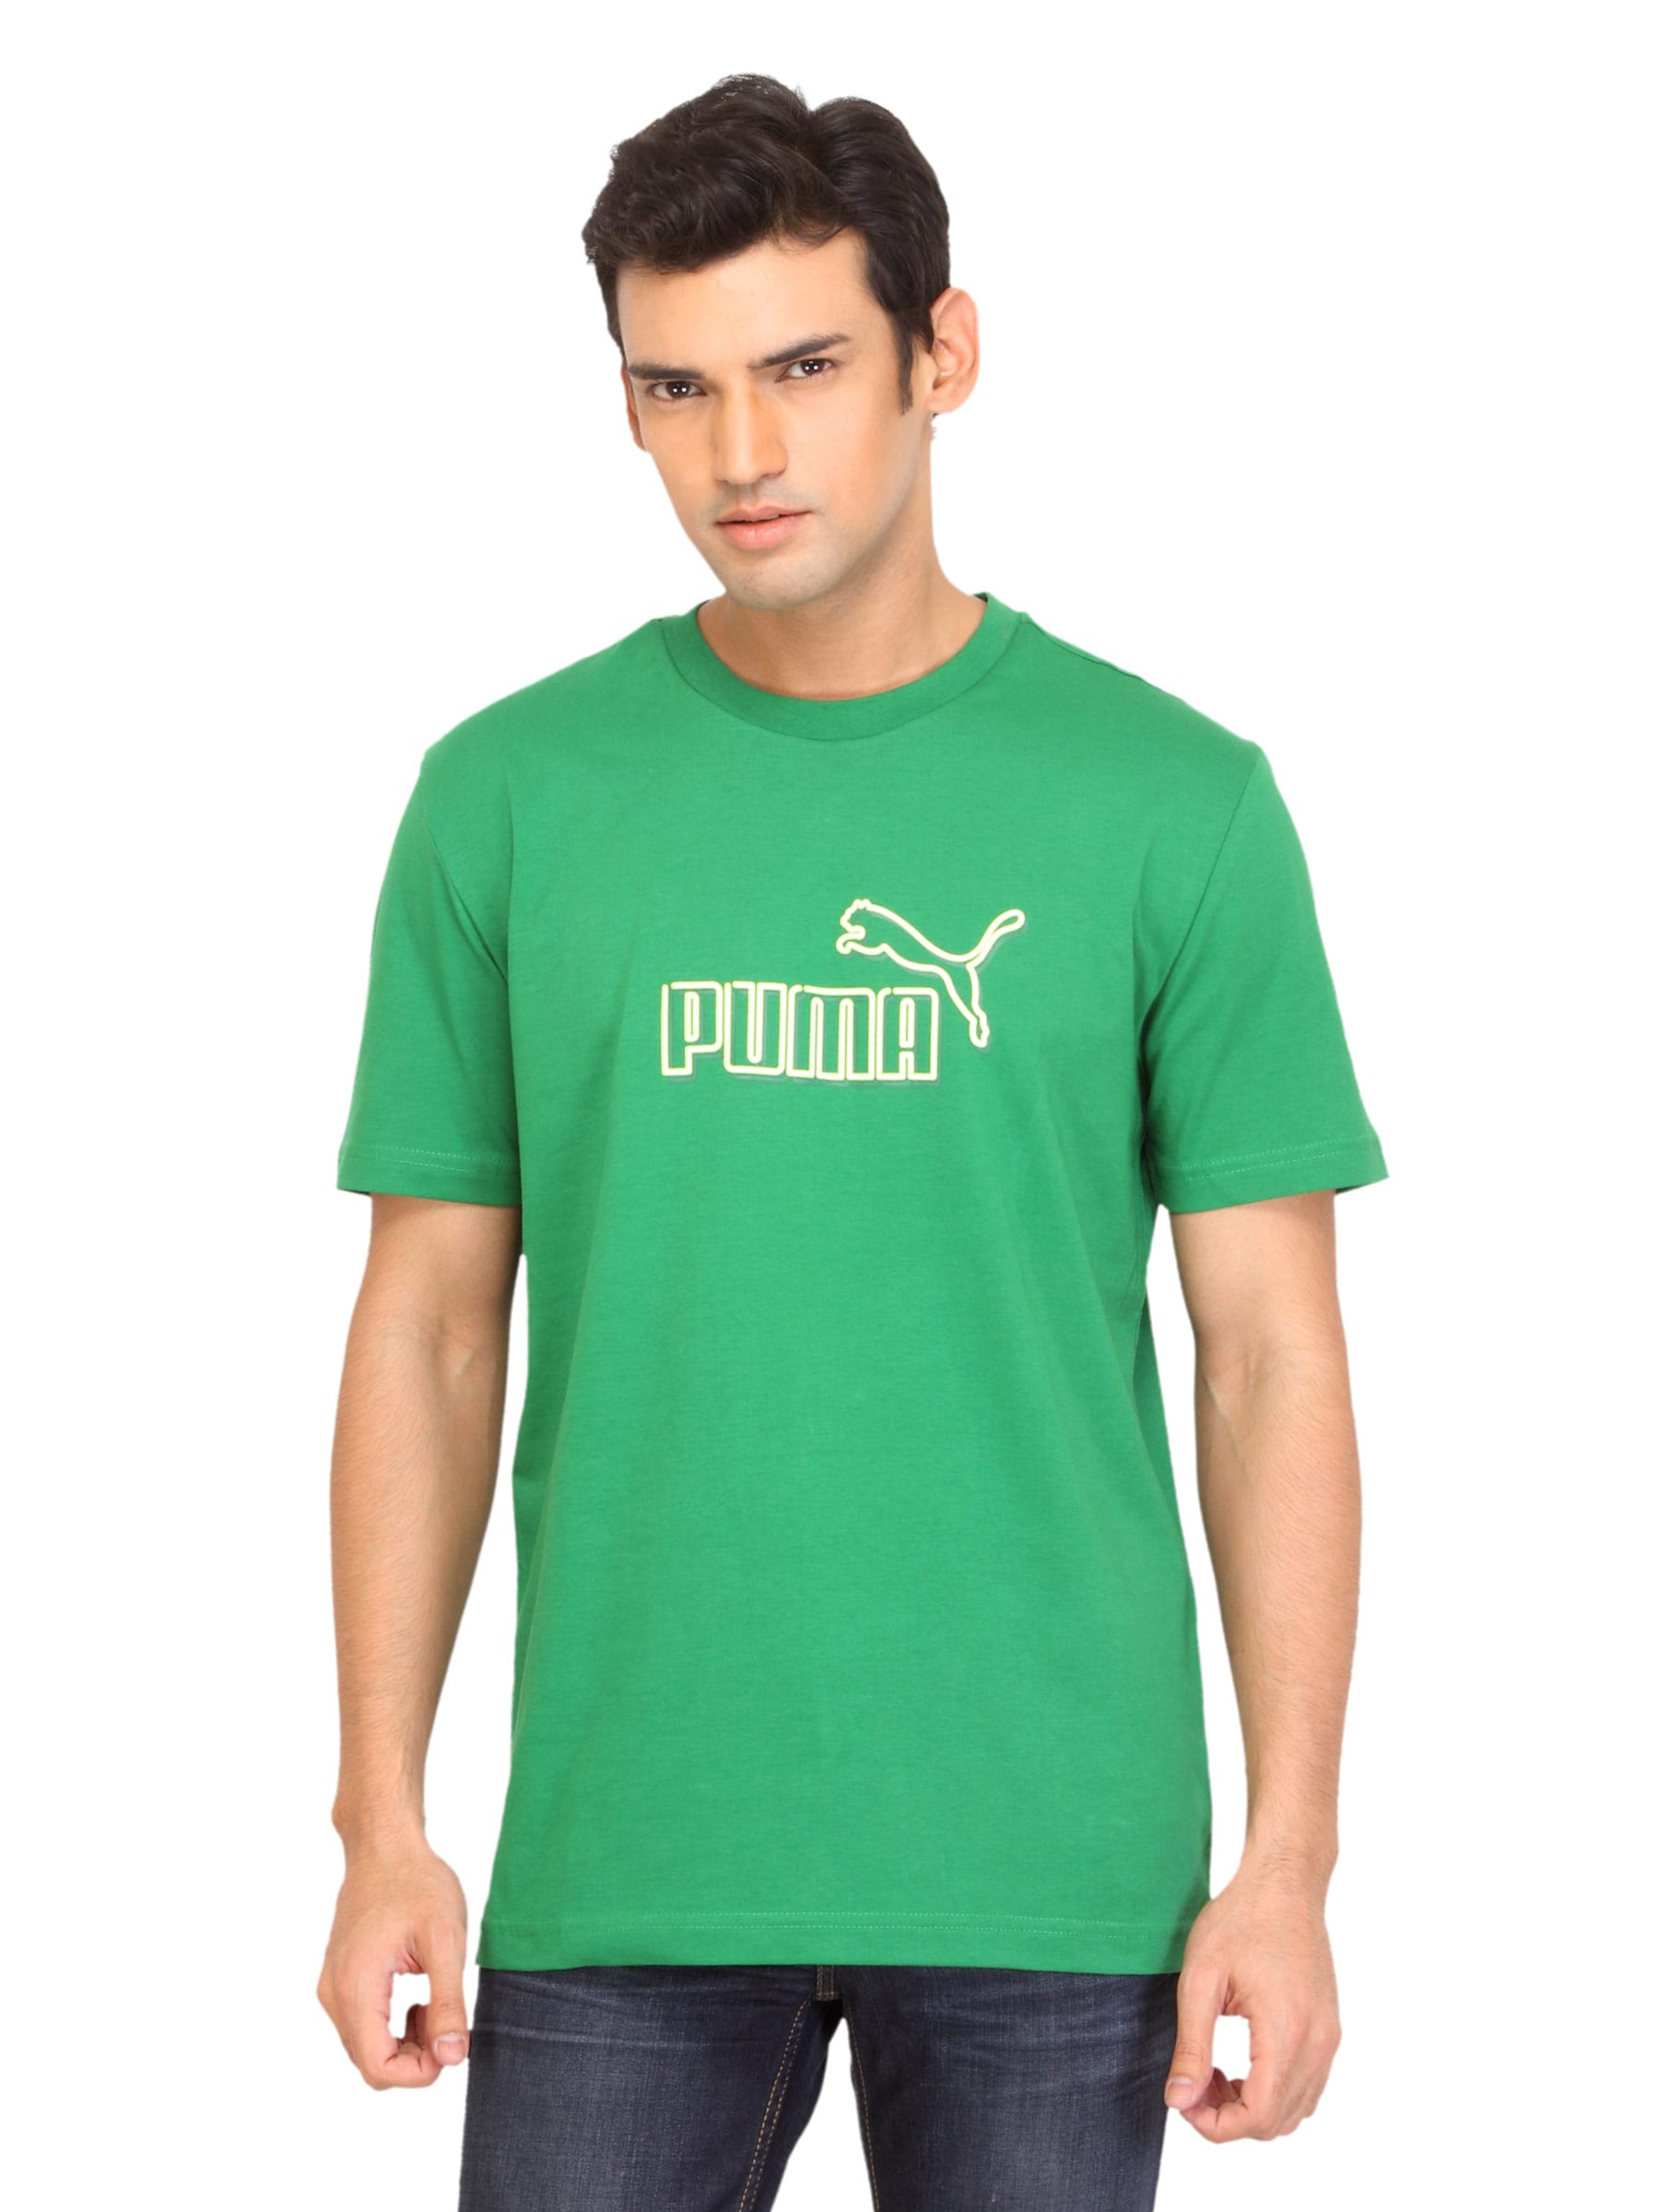 Puma Men Calonge Graphic Green T-shirt